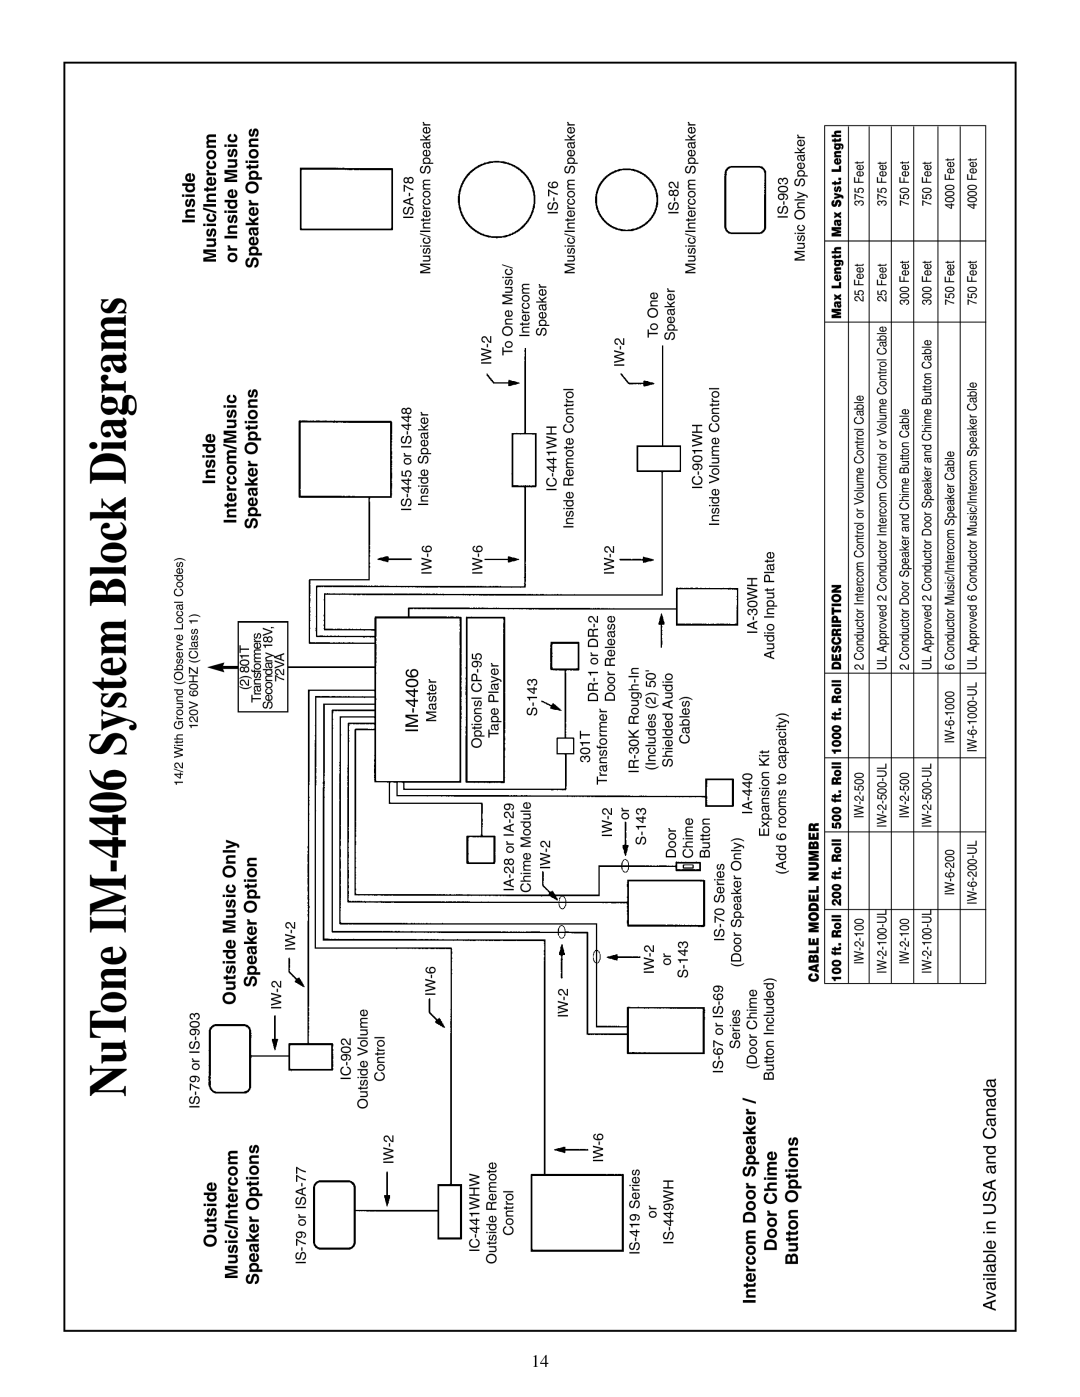 NuTone IM-5000, IM-3303, IMA-516, IM-3204WH, IK-15, IK-25 manual NuTone IM-4406 System Block Diagrams 